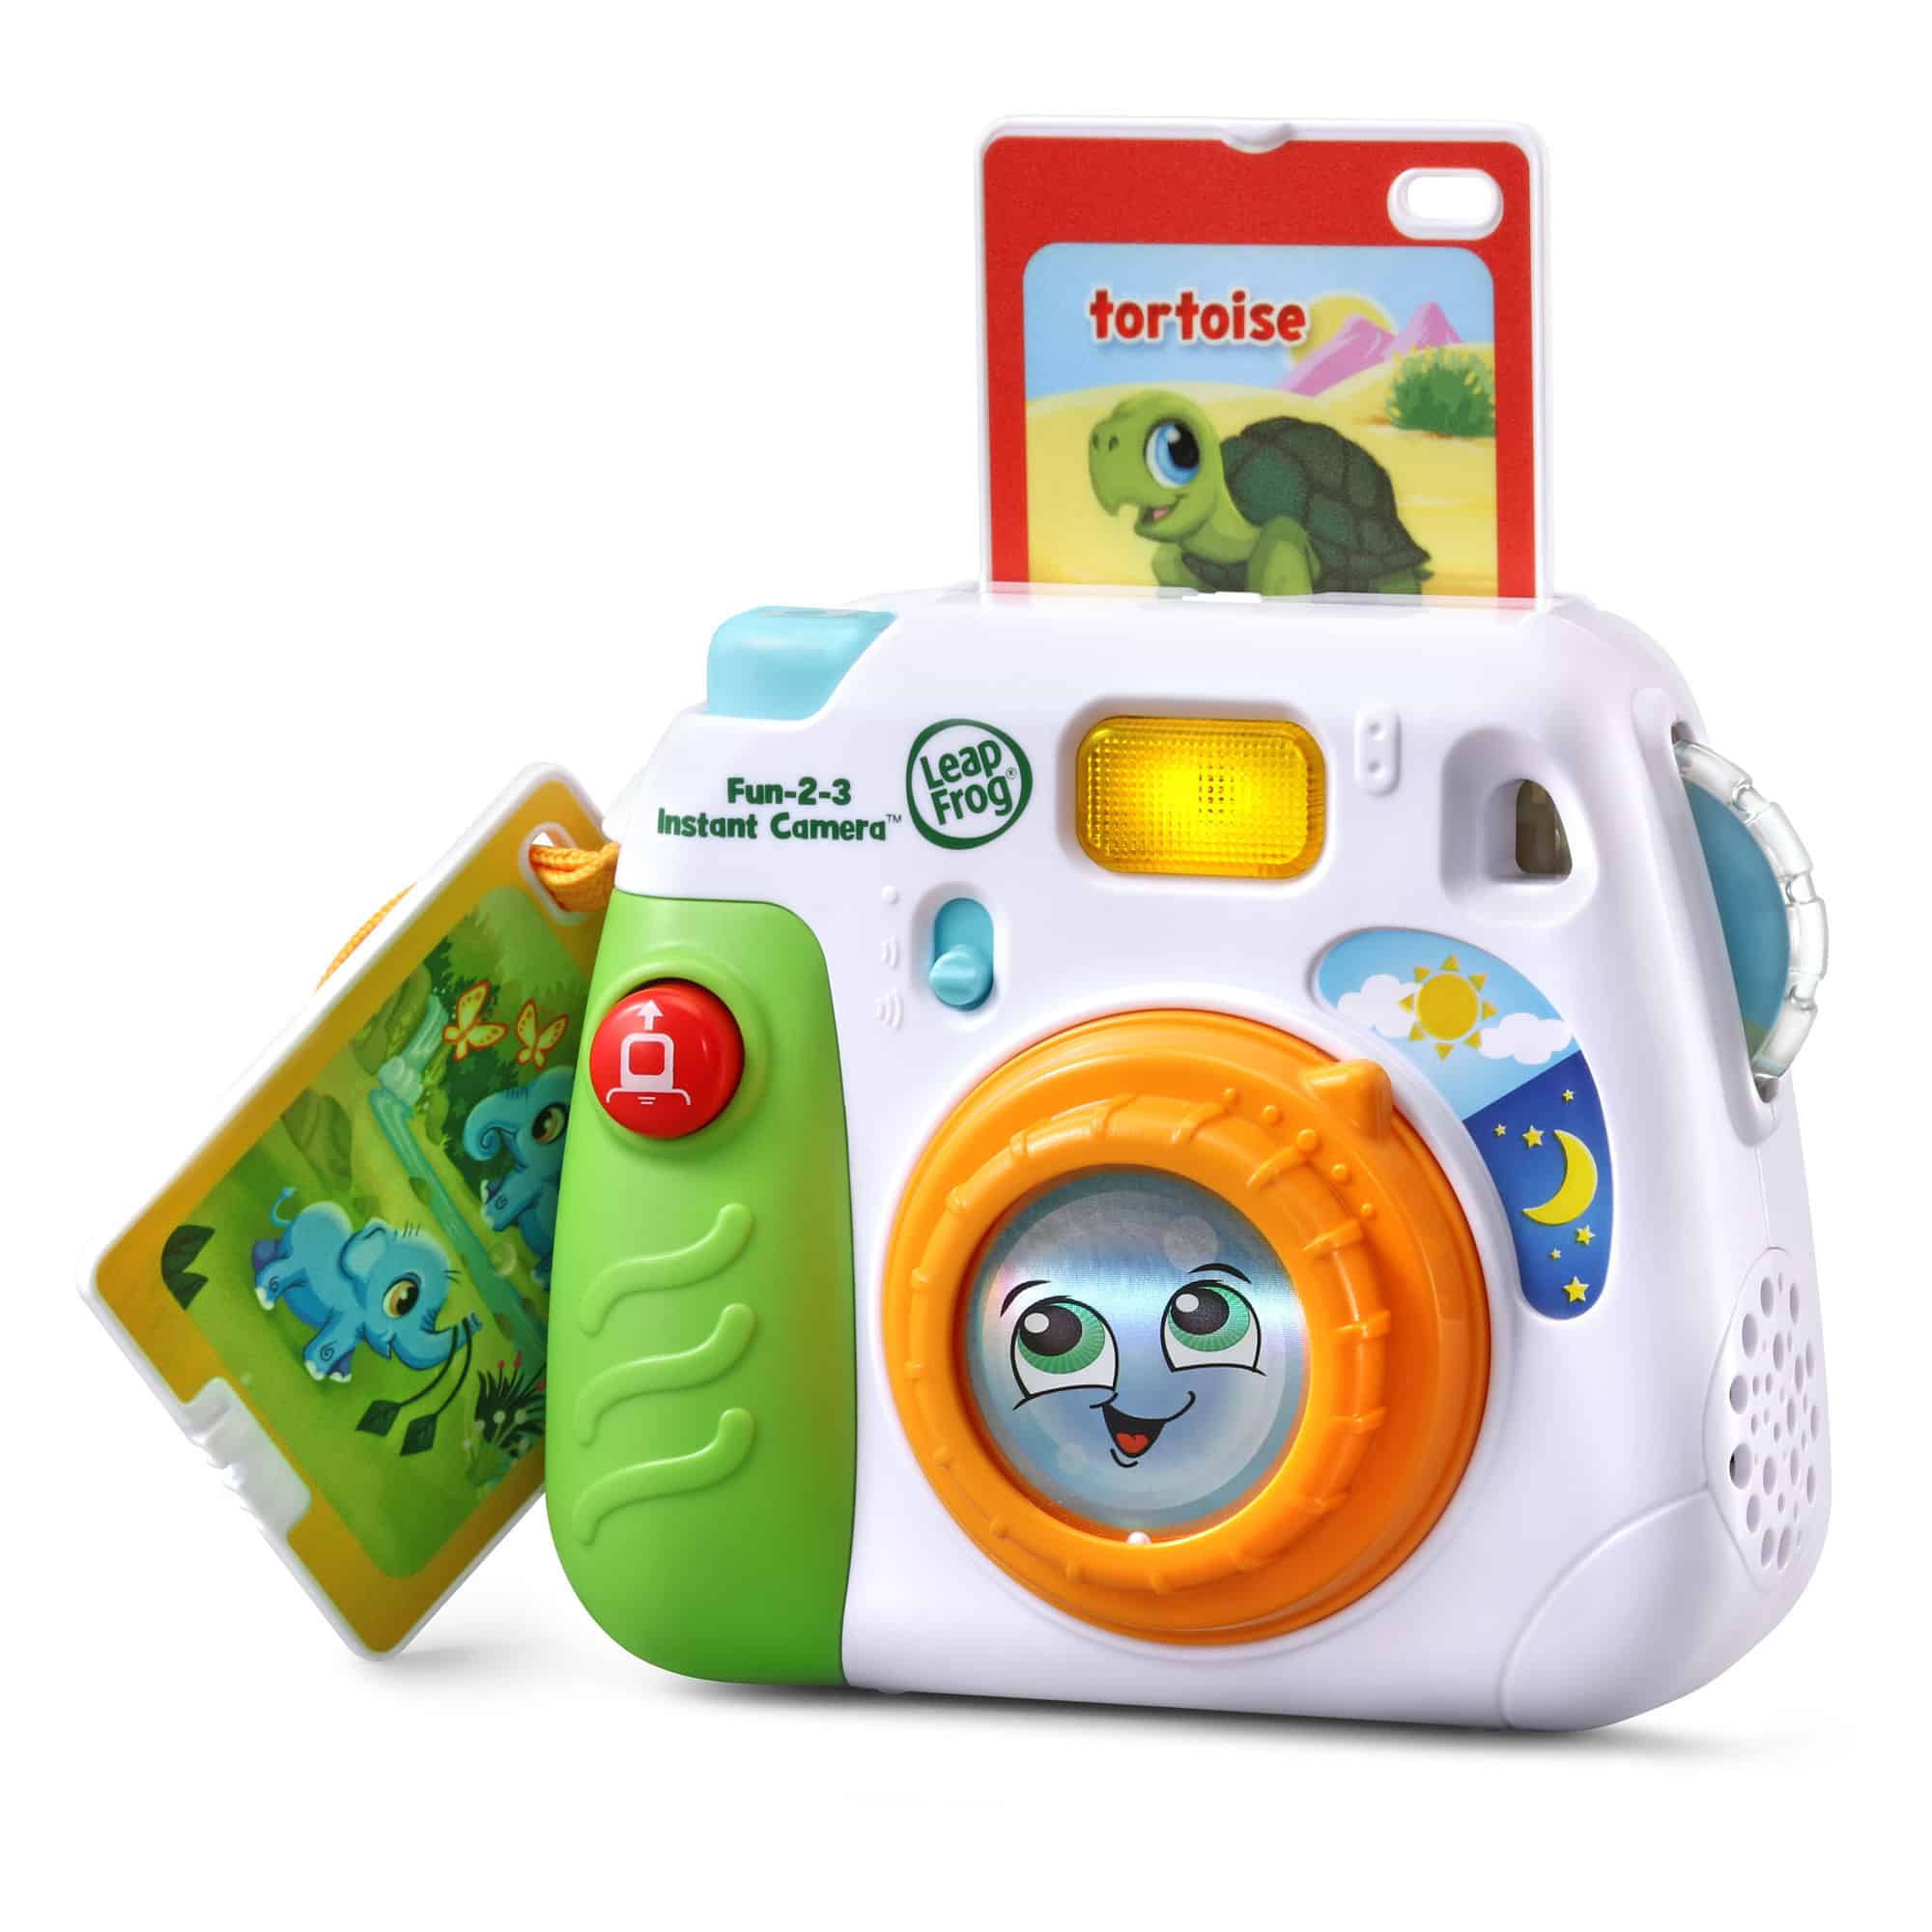 LeapFrog - Fun-2-3 Instant Camera